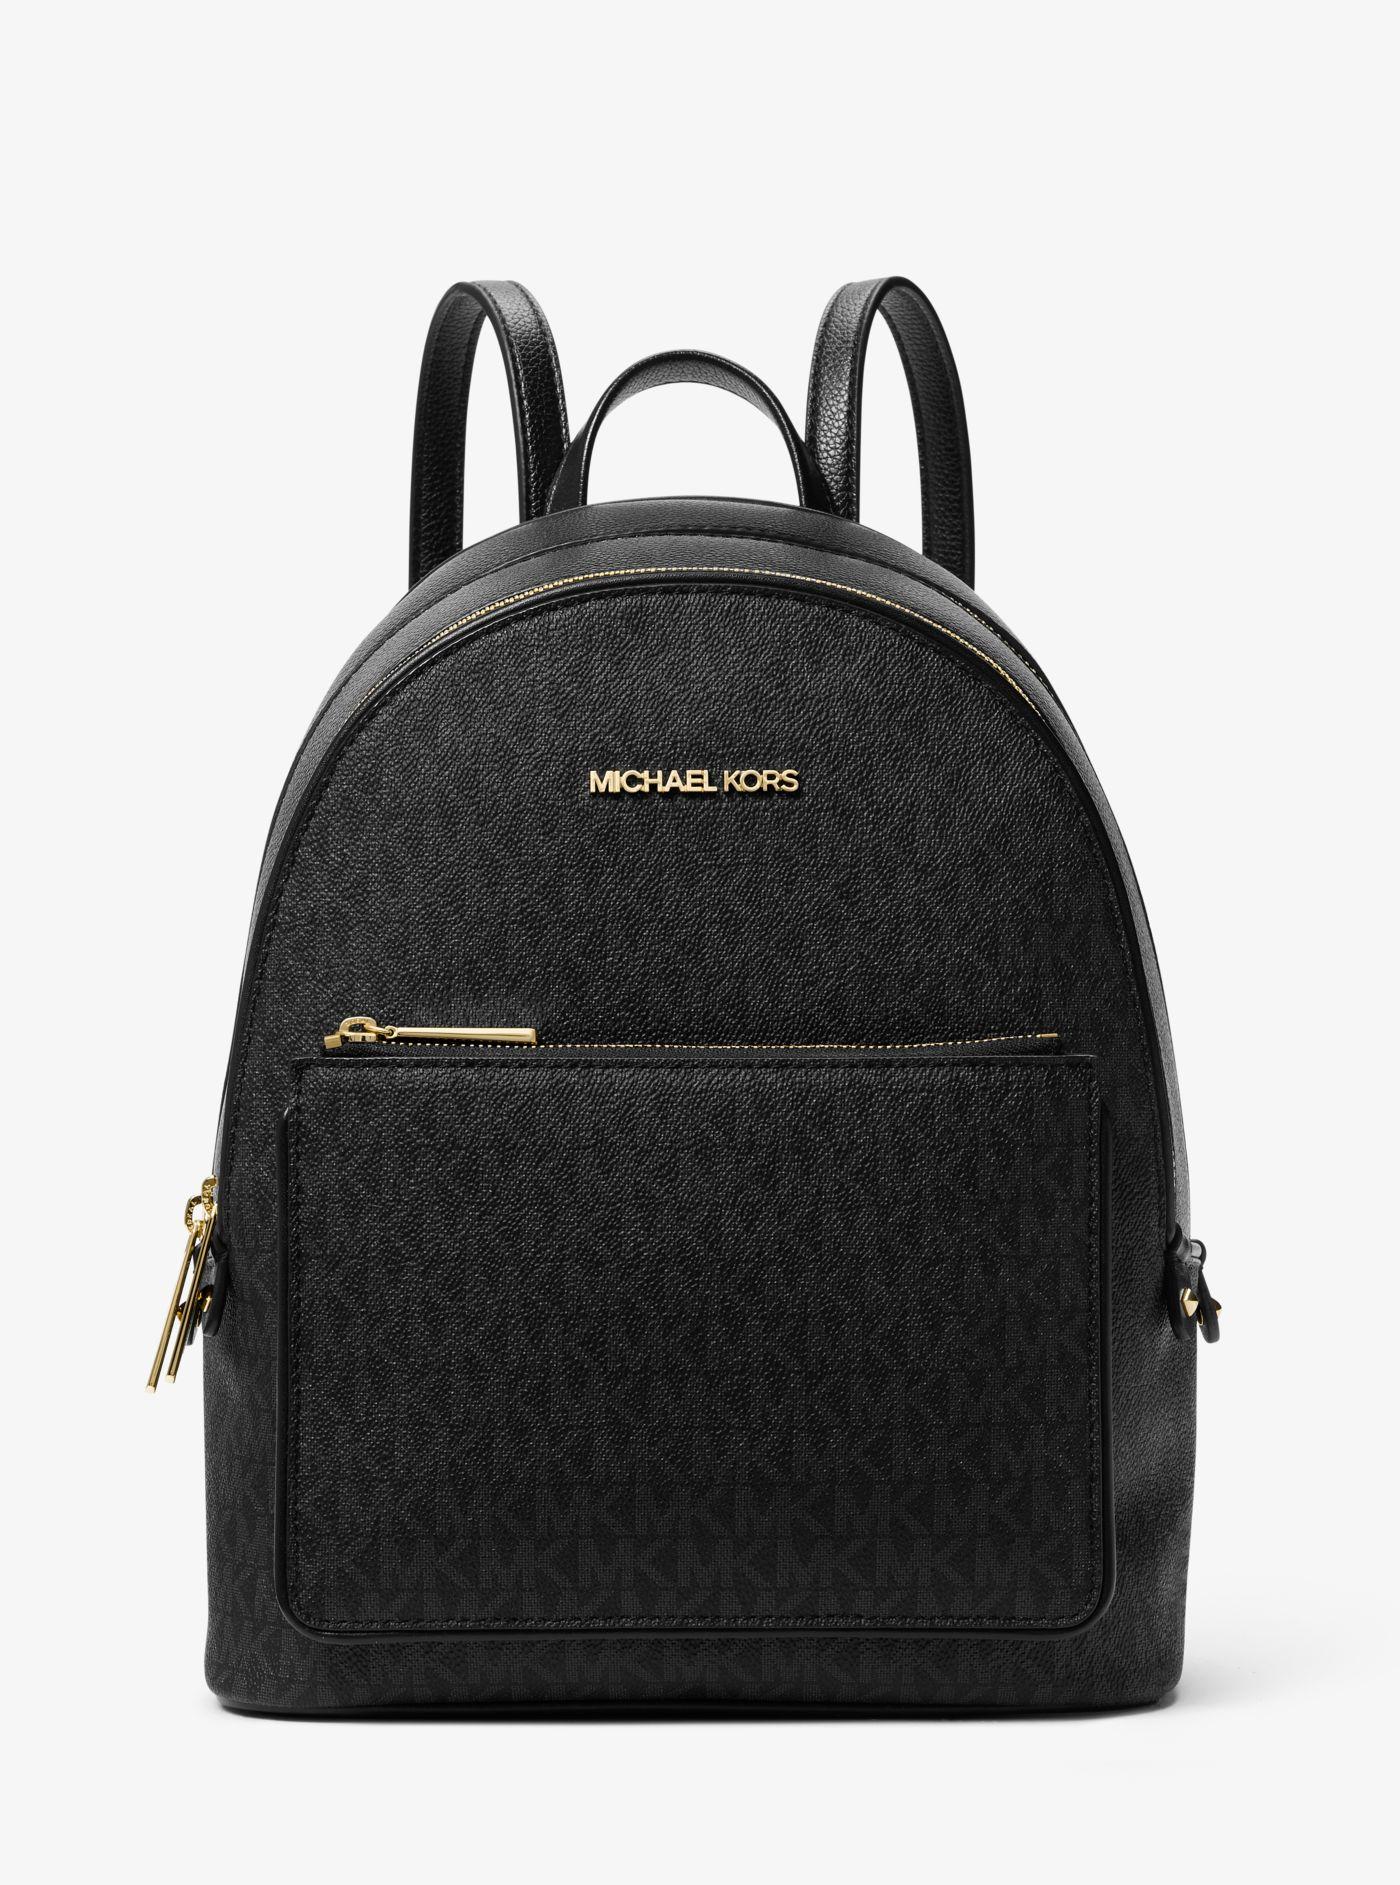 Michael Kors Adina Medium Logo Backpack in Black | Lyst